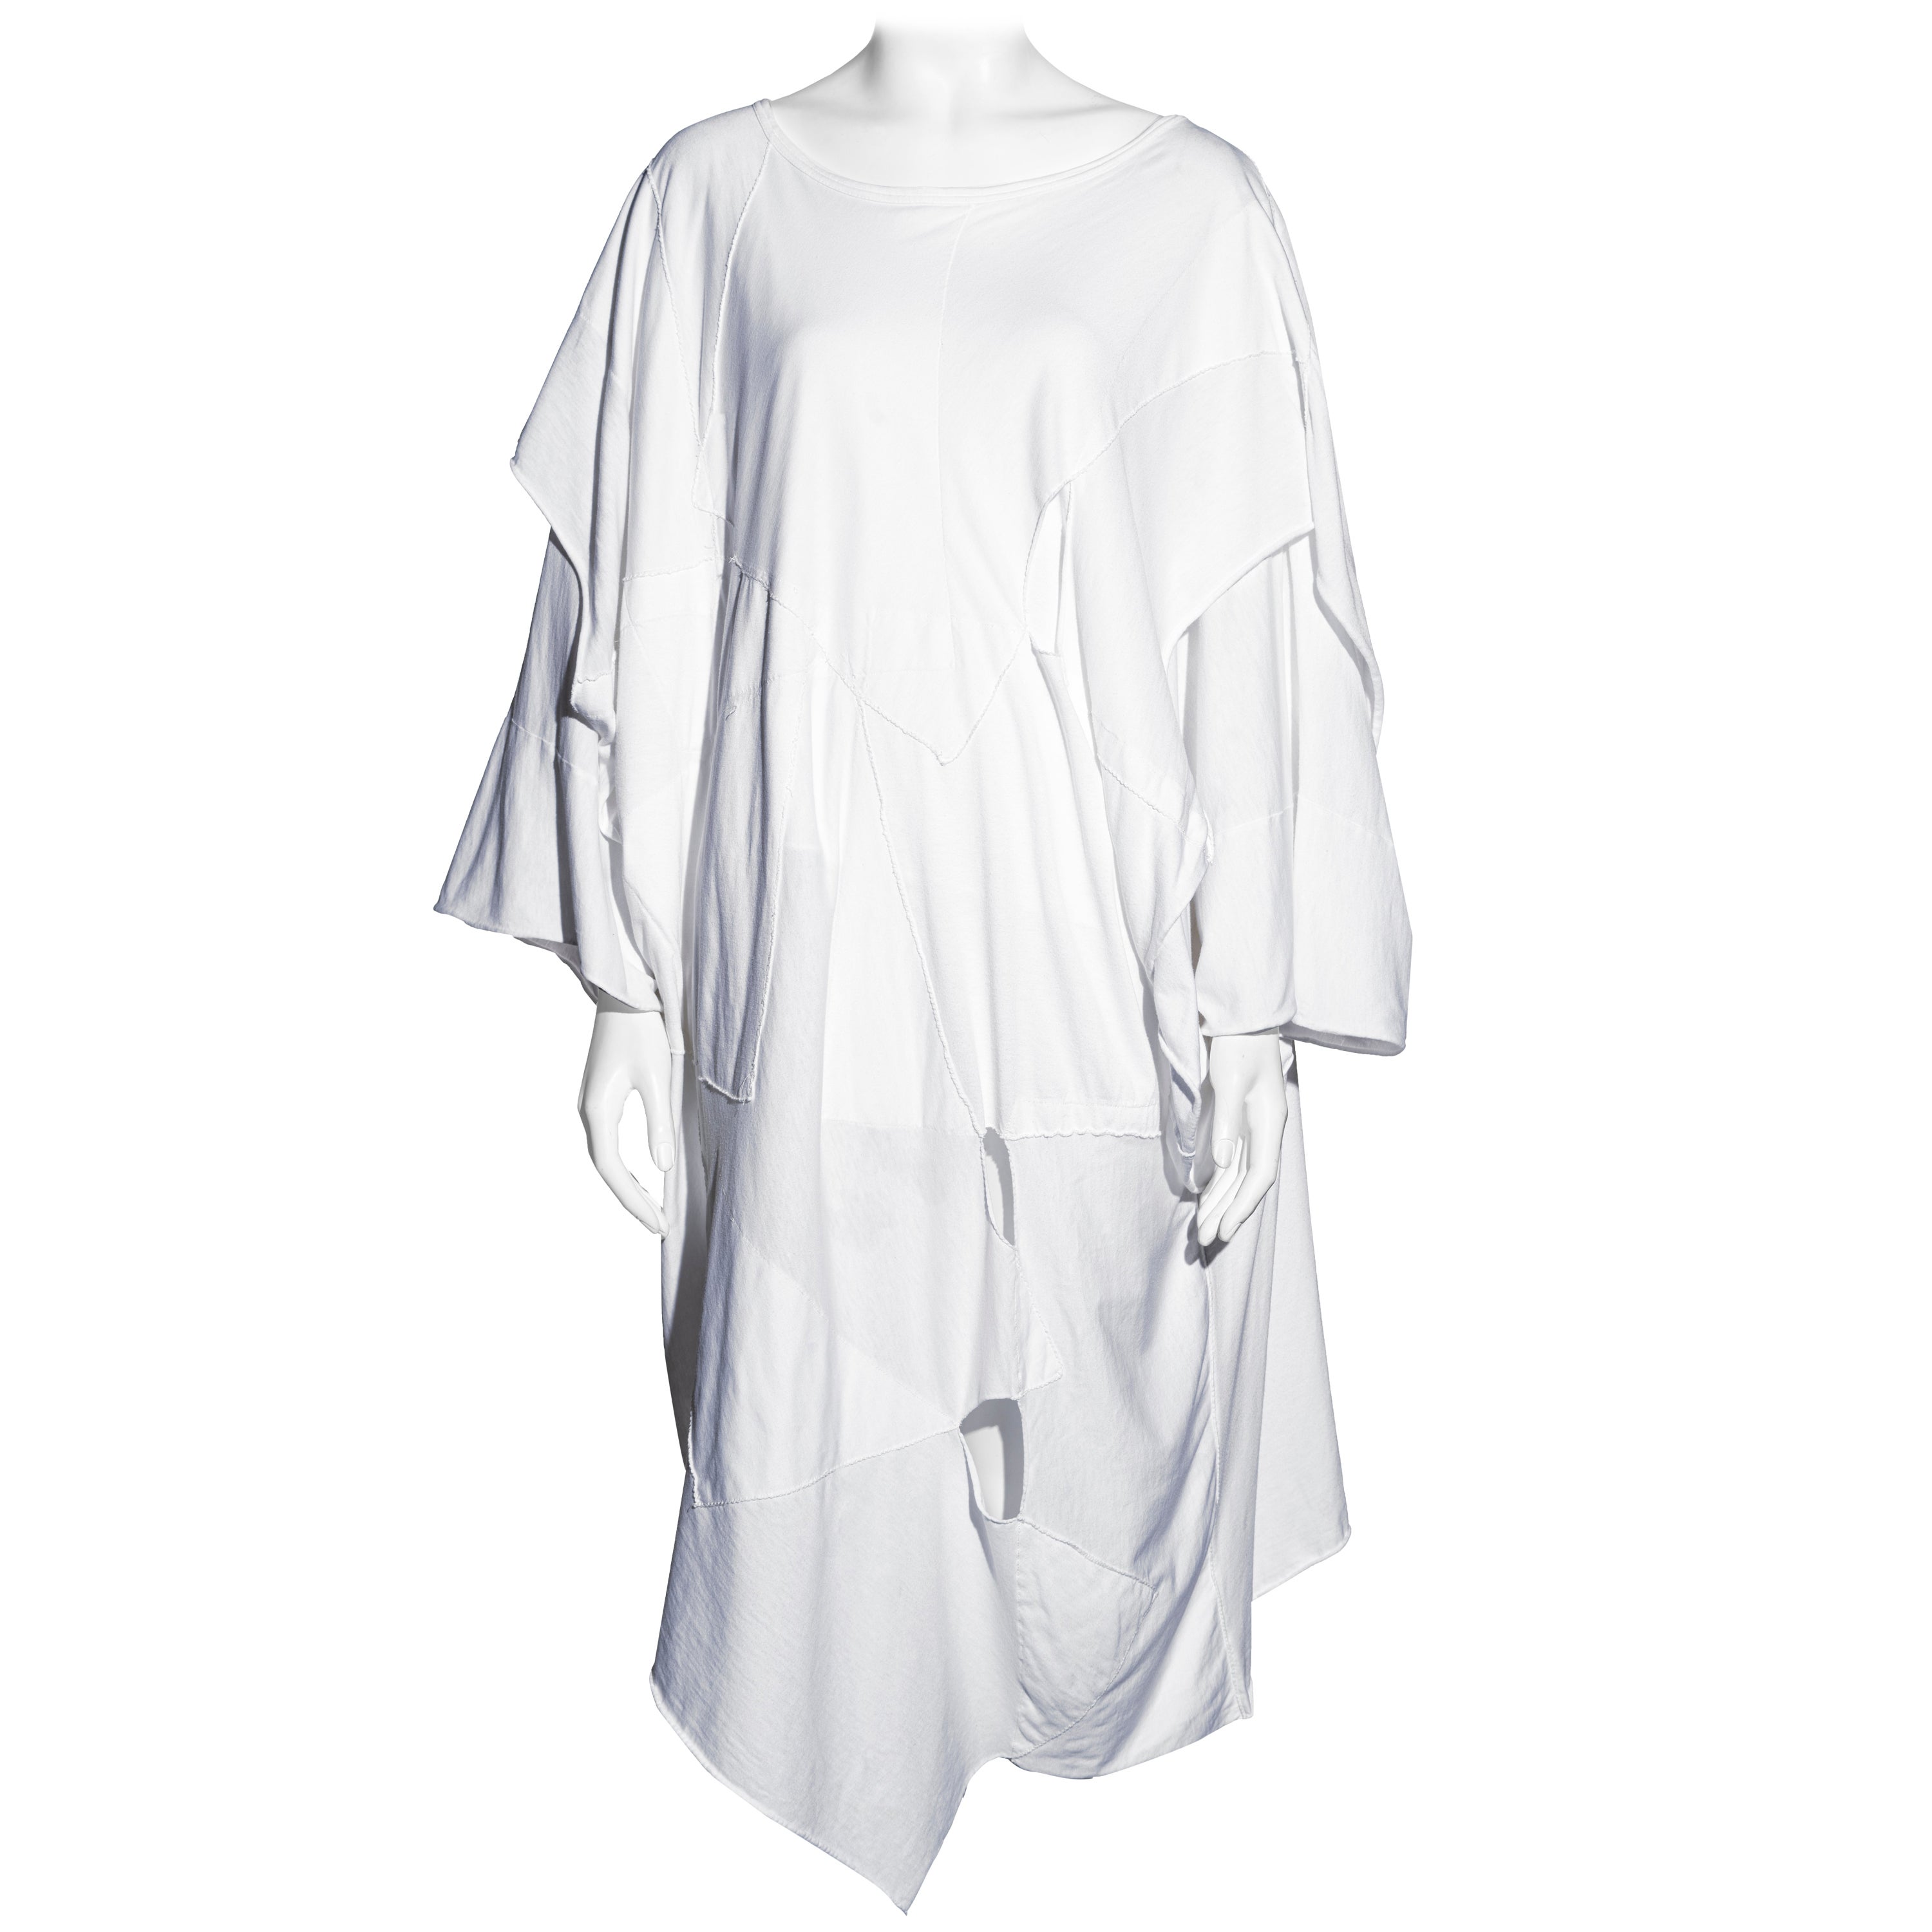 Comme des Garcons white oversized patchwork t-shirt dress, ss 1983